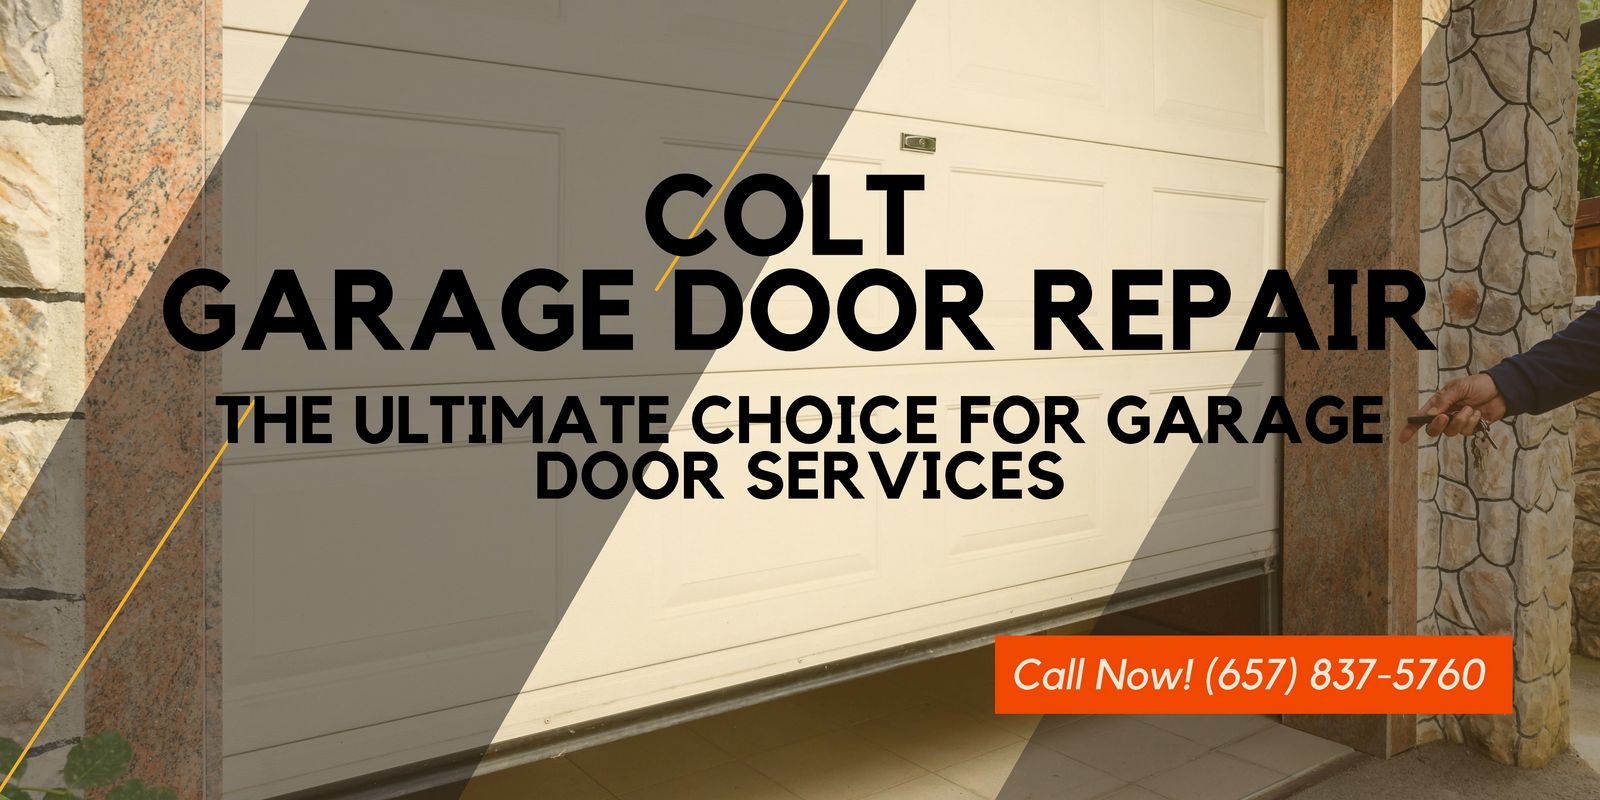 Colt Garage Door Repair Costa Mesa CA